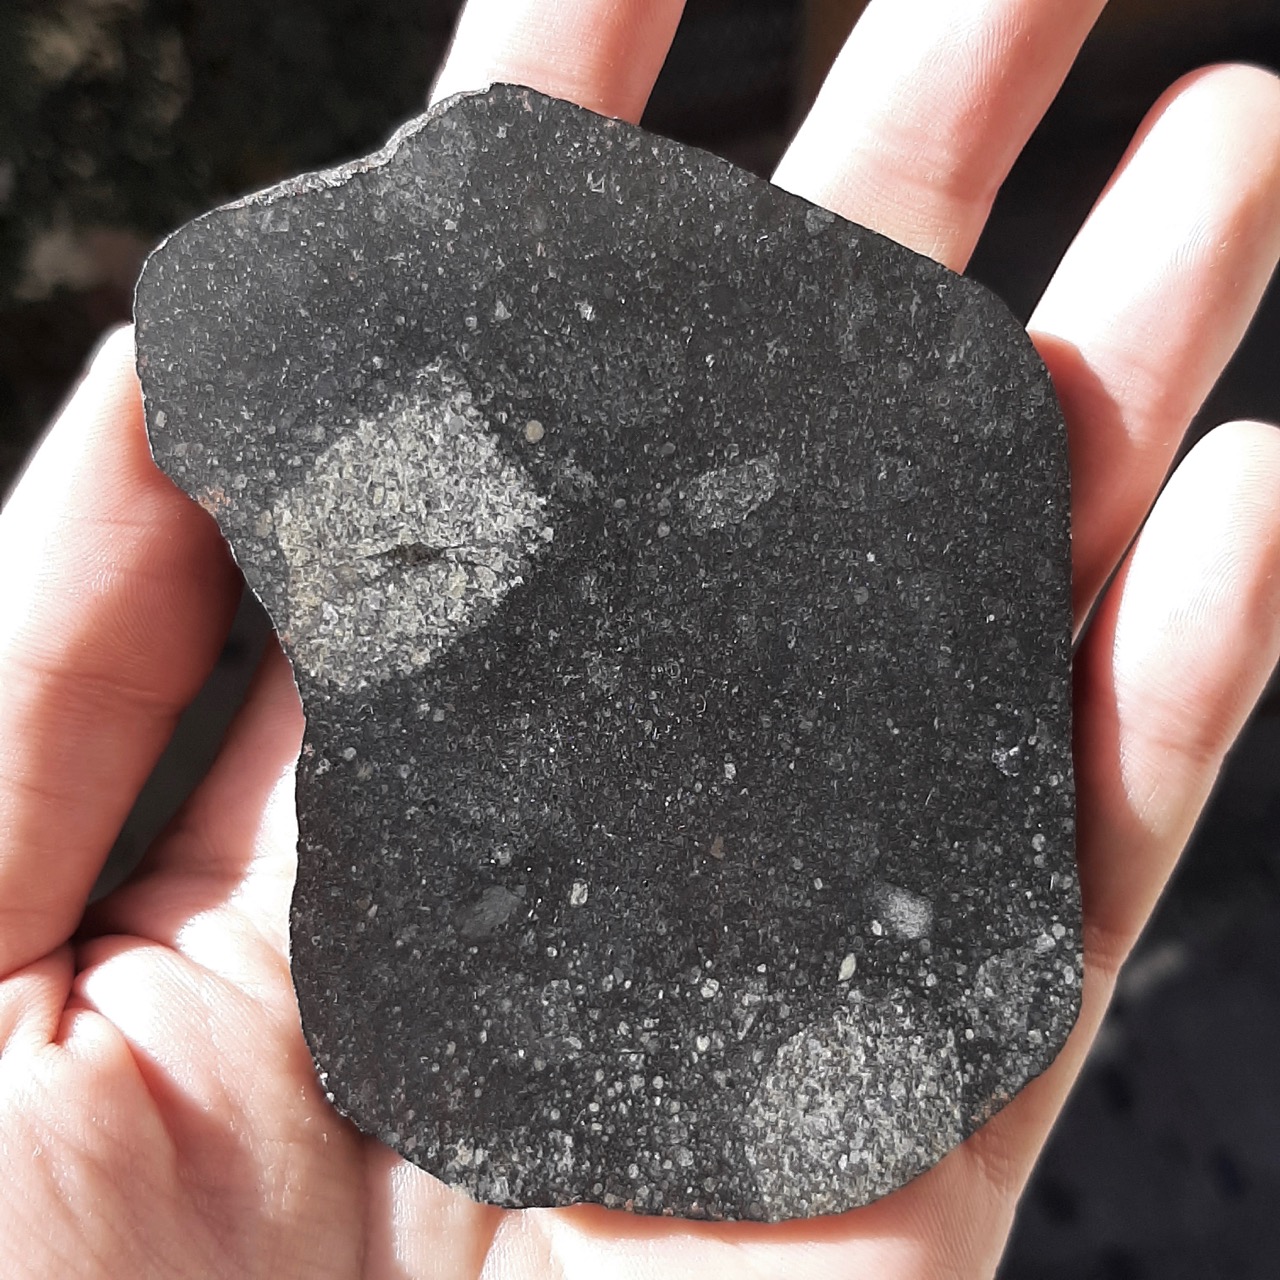 Ghubara. Classic meteorite from Oman.